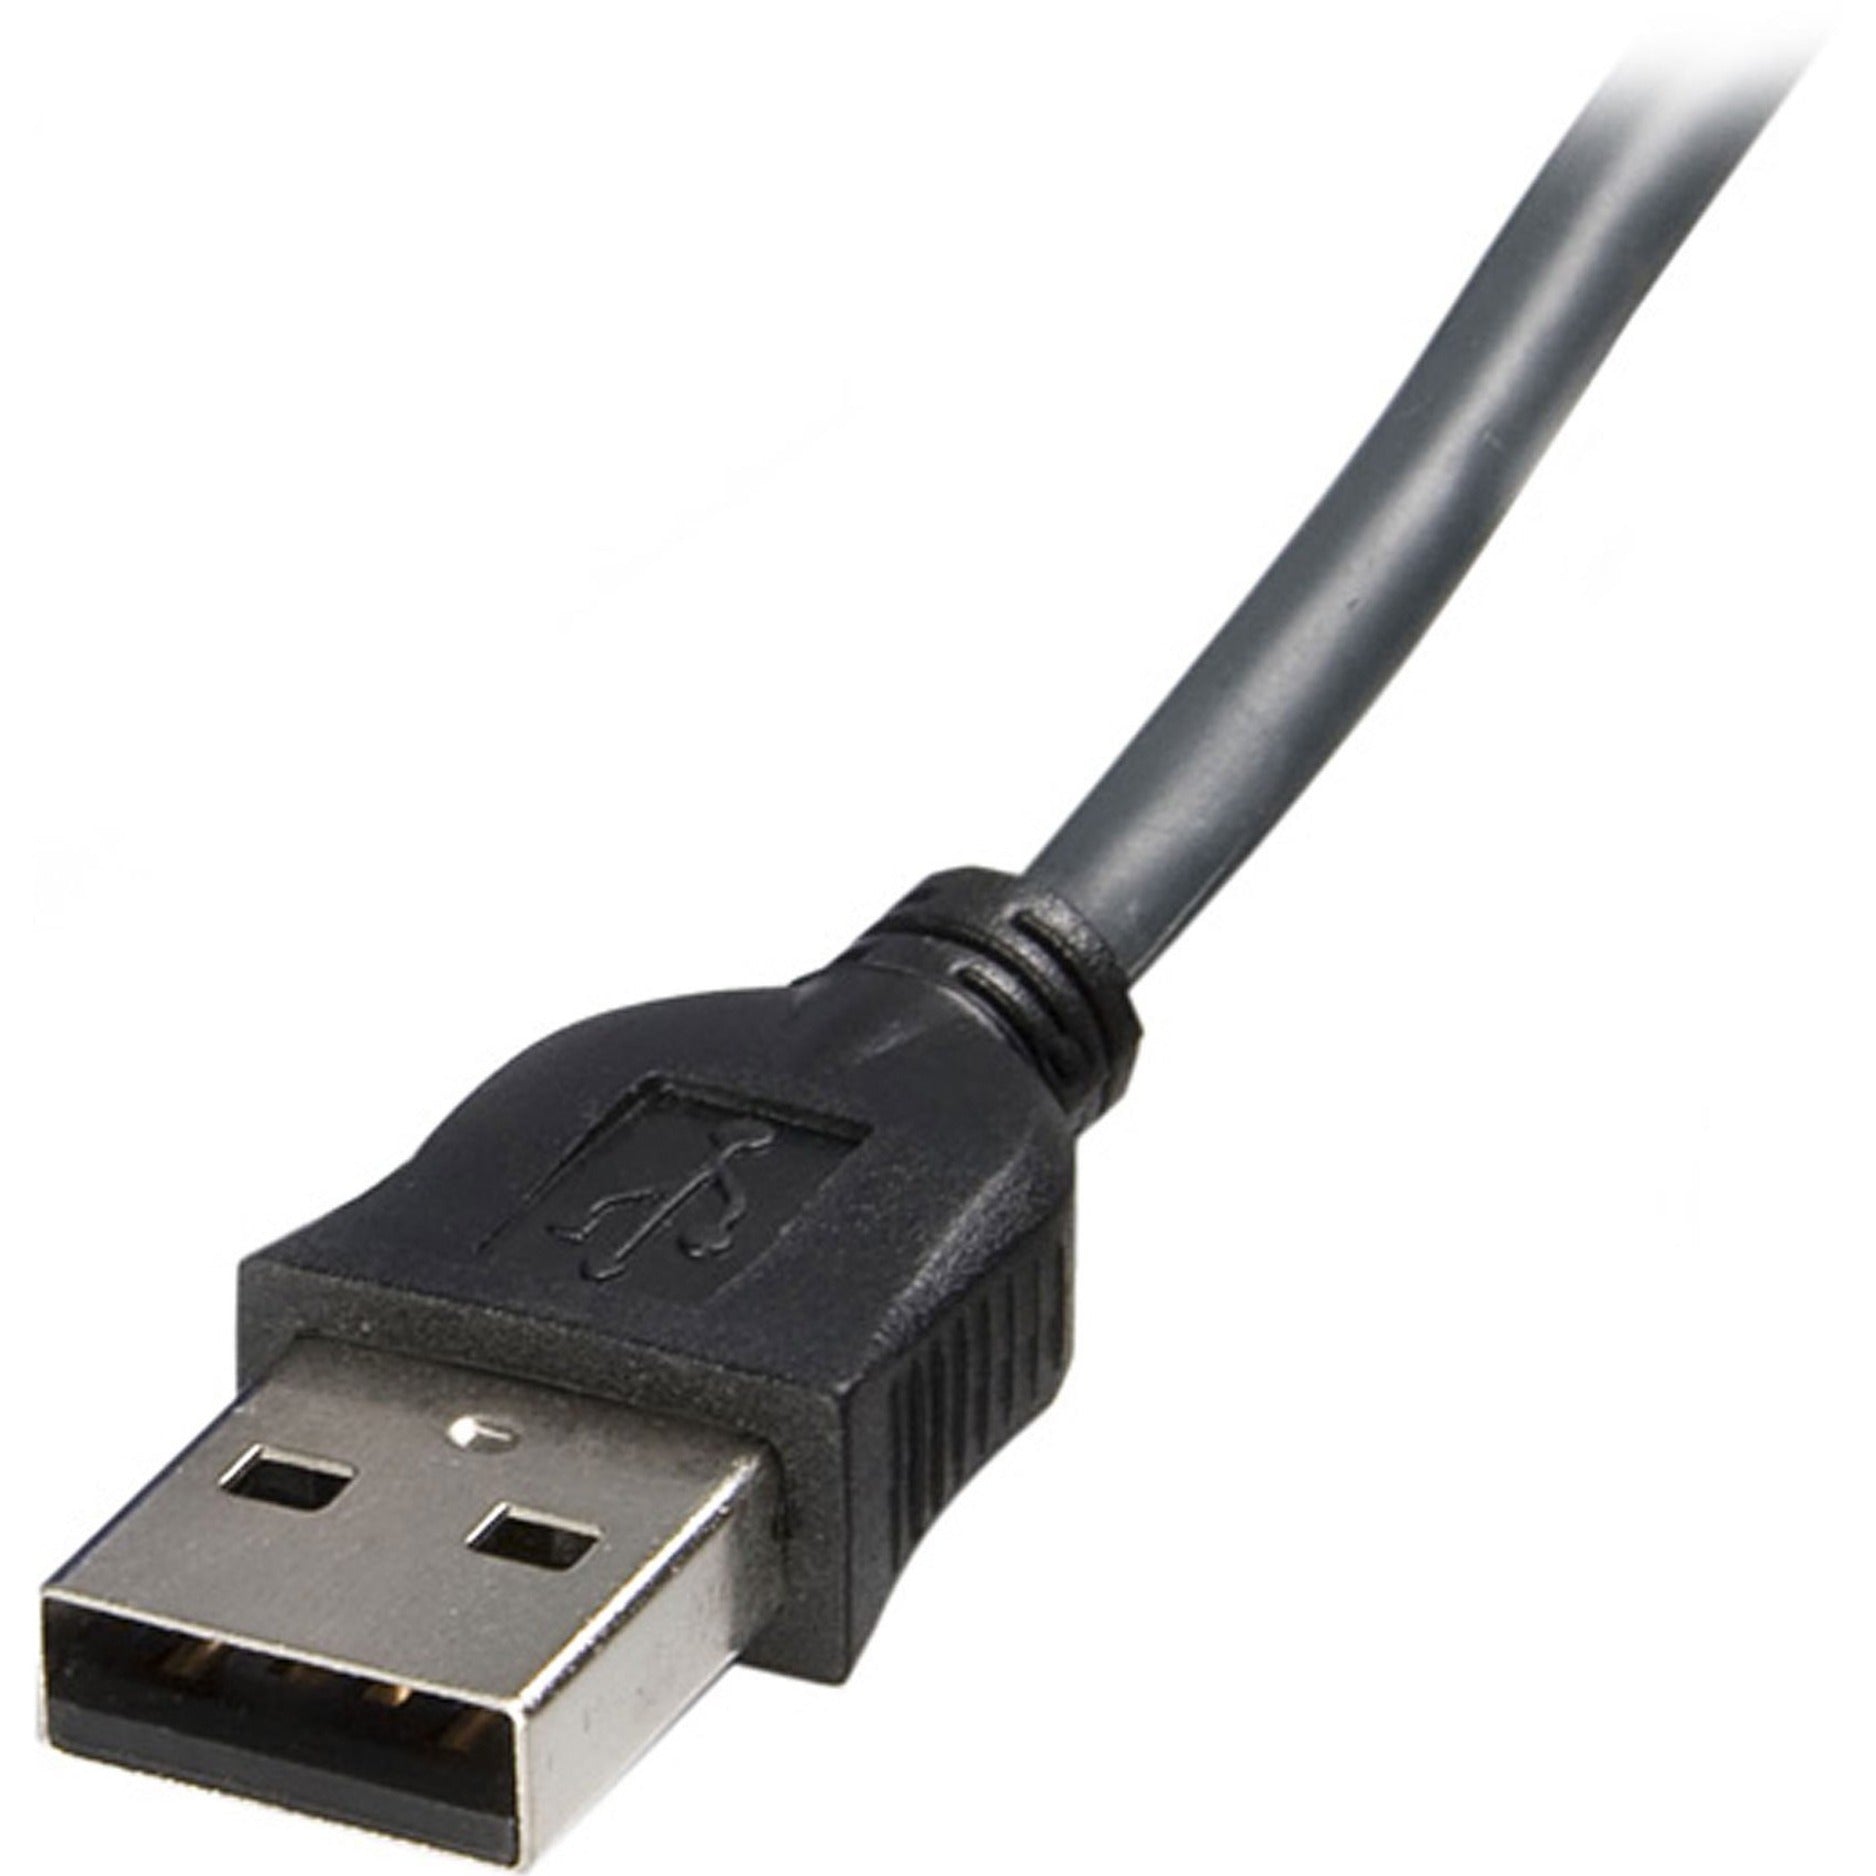 StarTech.com SVUSBVGA6 Ultra-Thin USB VGA 2-in-1 KVM Cable, 6 ft, Tangle Resistant